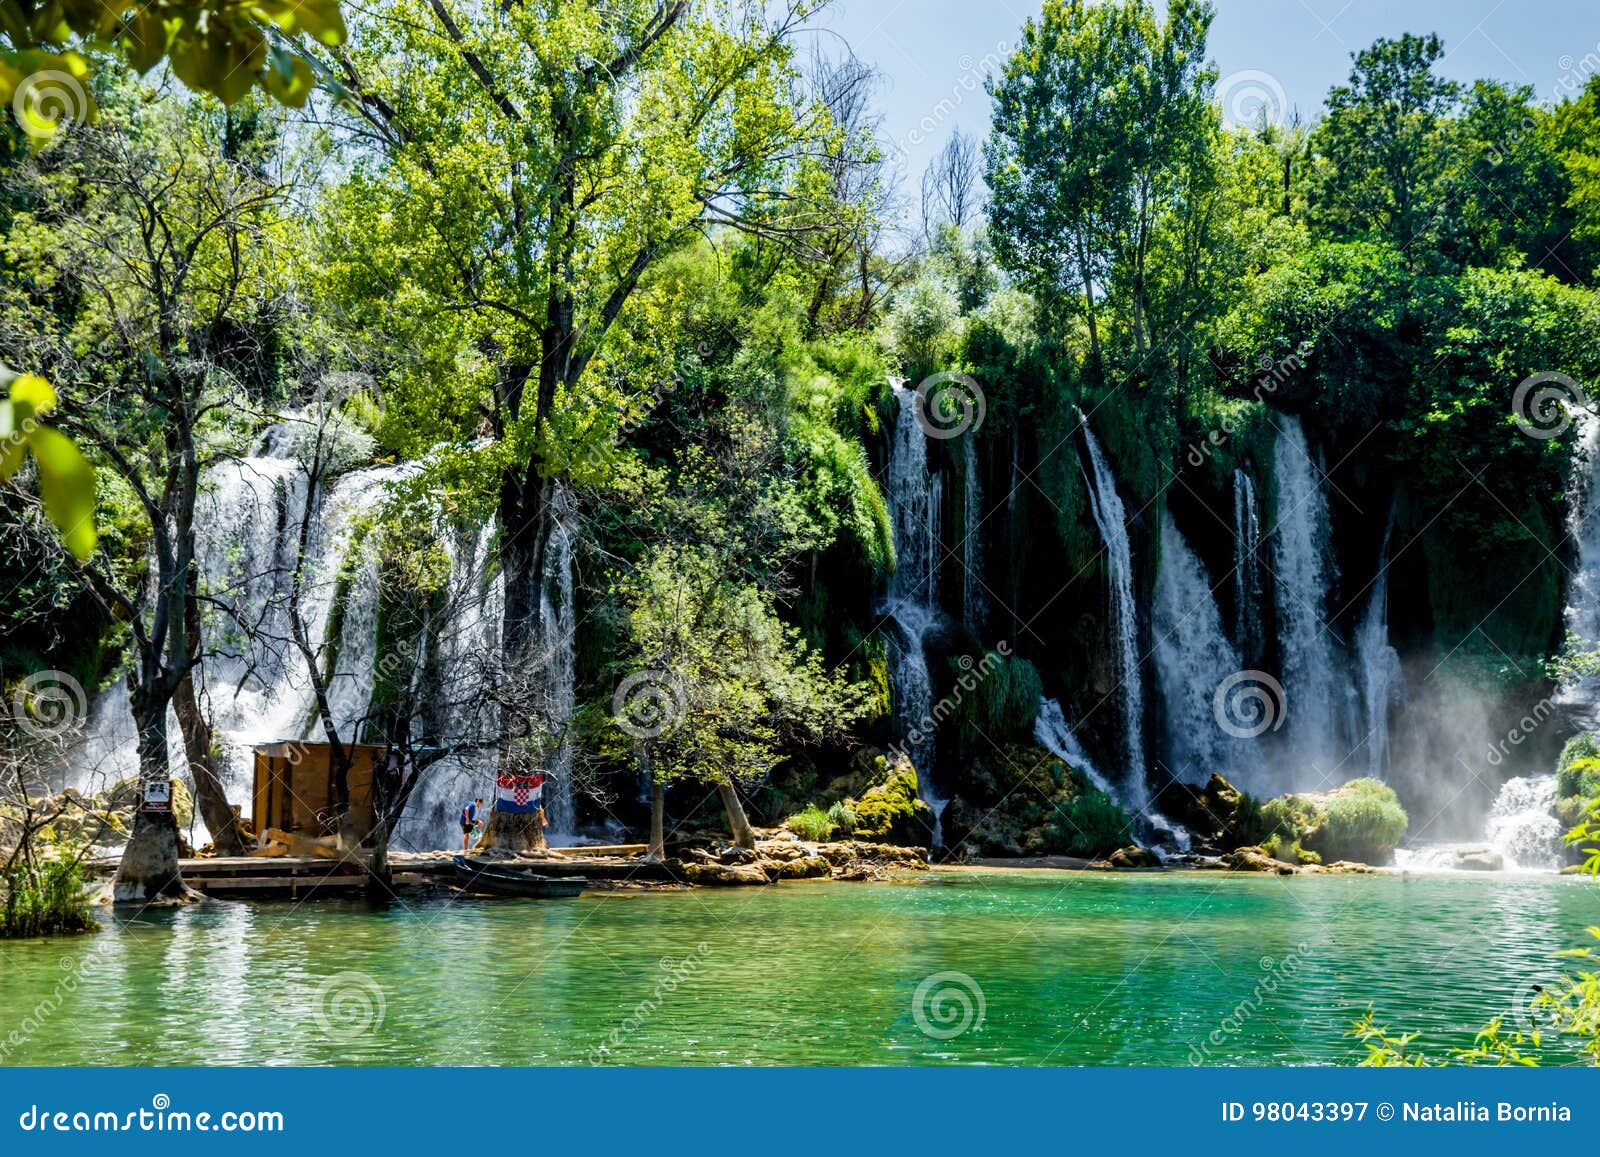 Cascata Di Stupore Di Kravice In Bosnia Erzegovina Immagine Stock Immagine Di Bello Nave